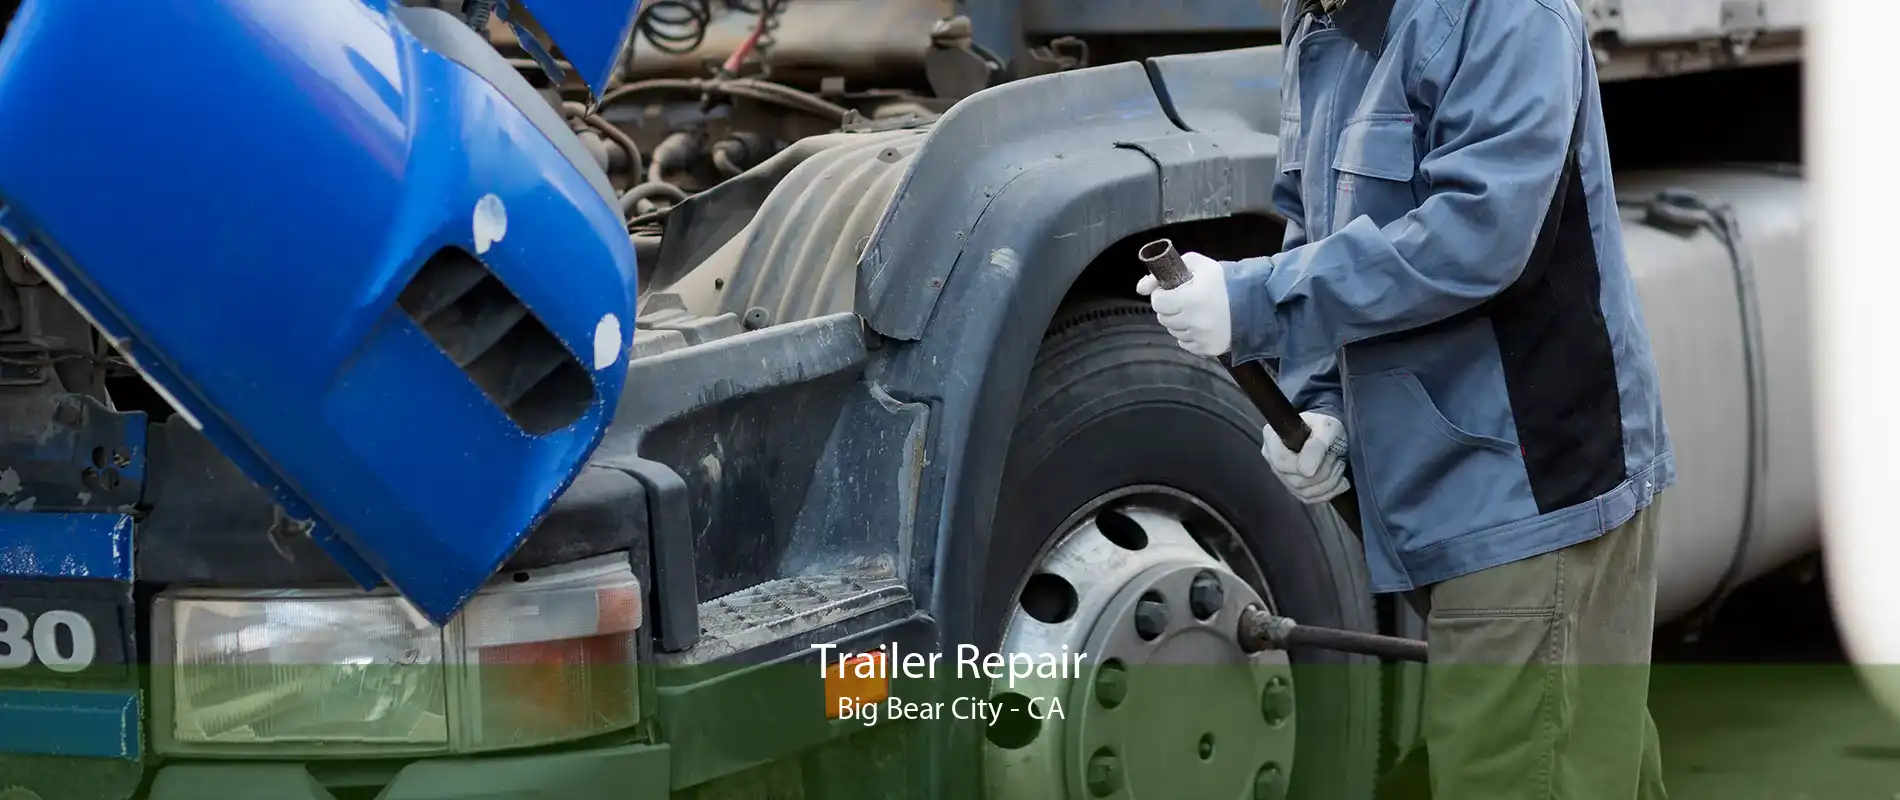 Trailer Repair Big Bear City - CA